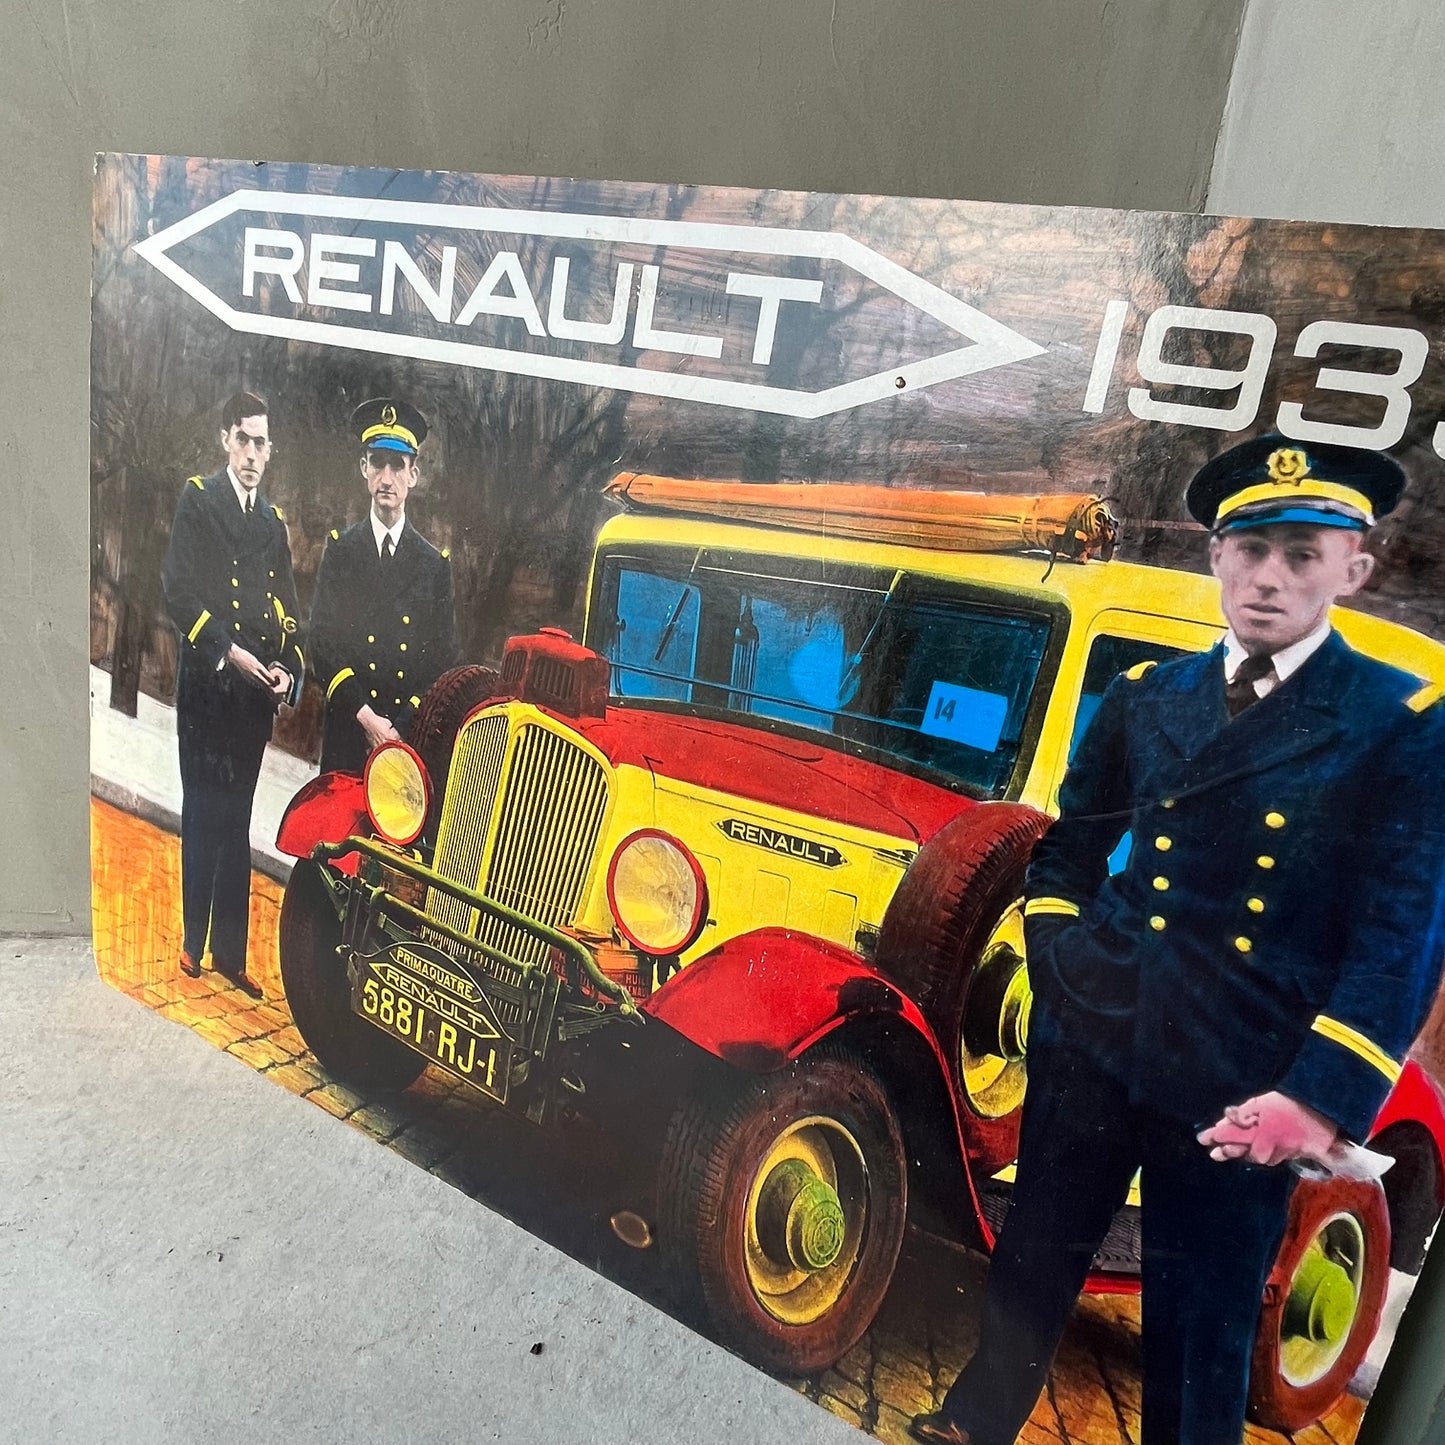 【vintage】Renault 1933 アートスチレンボード